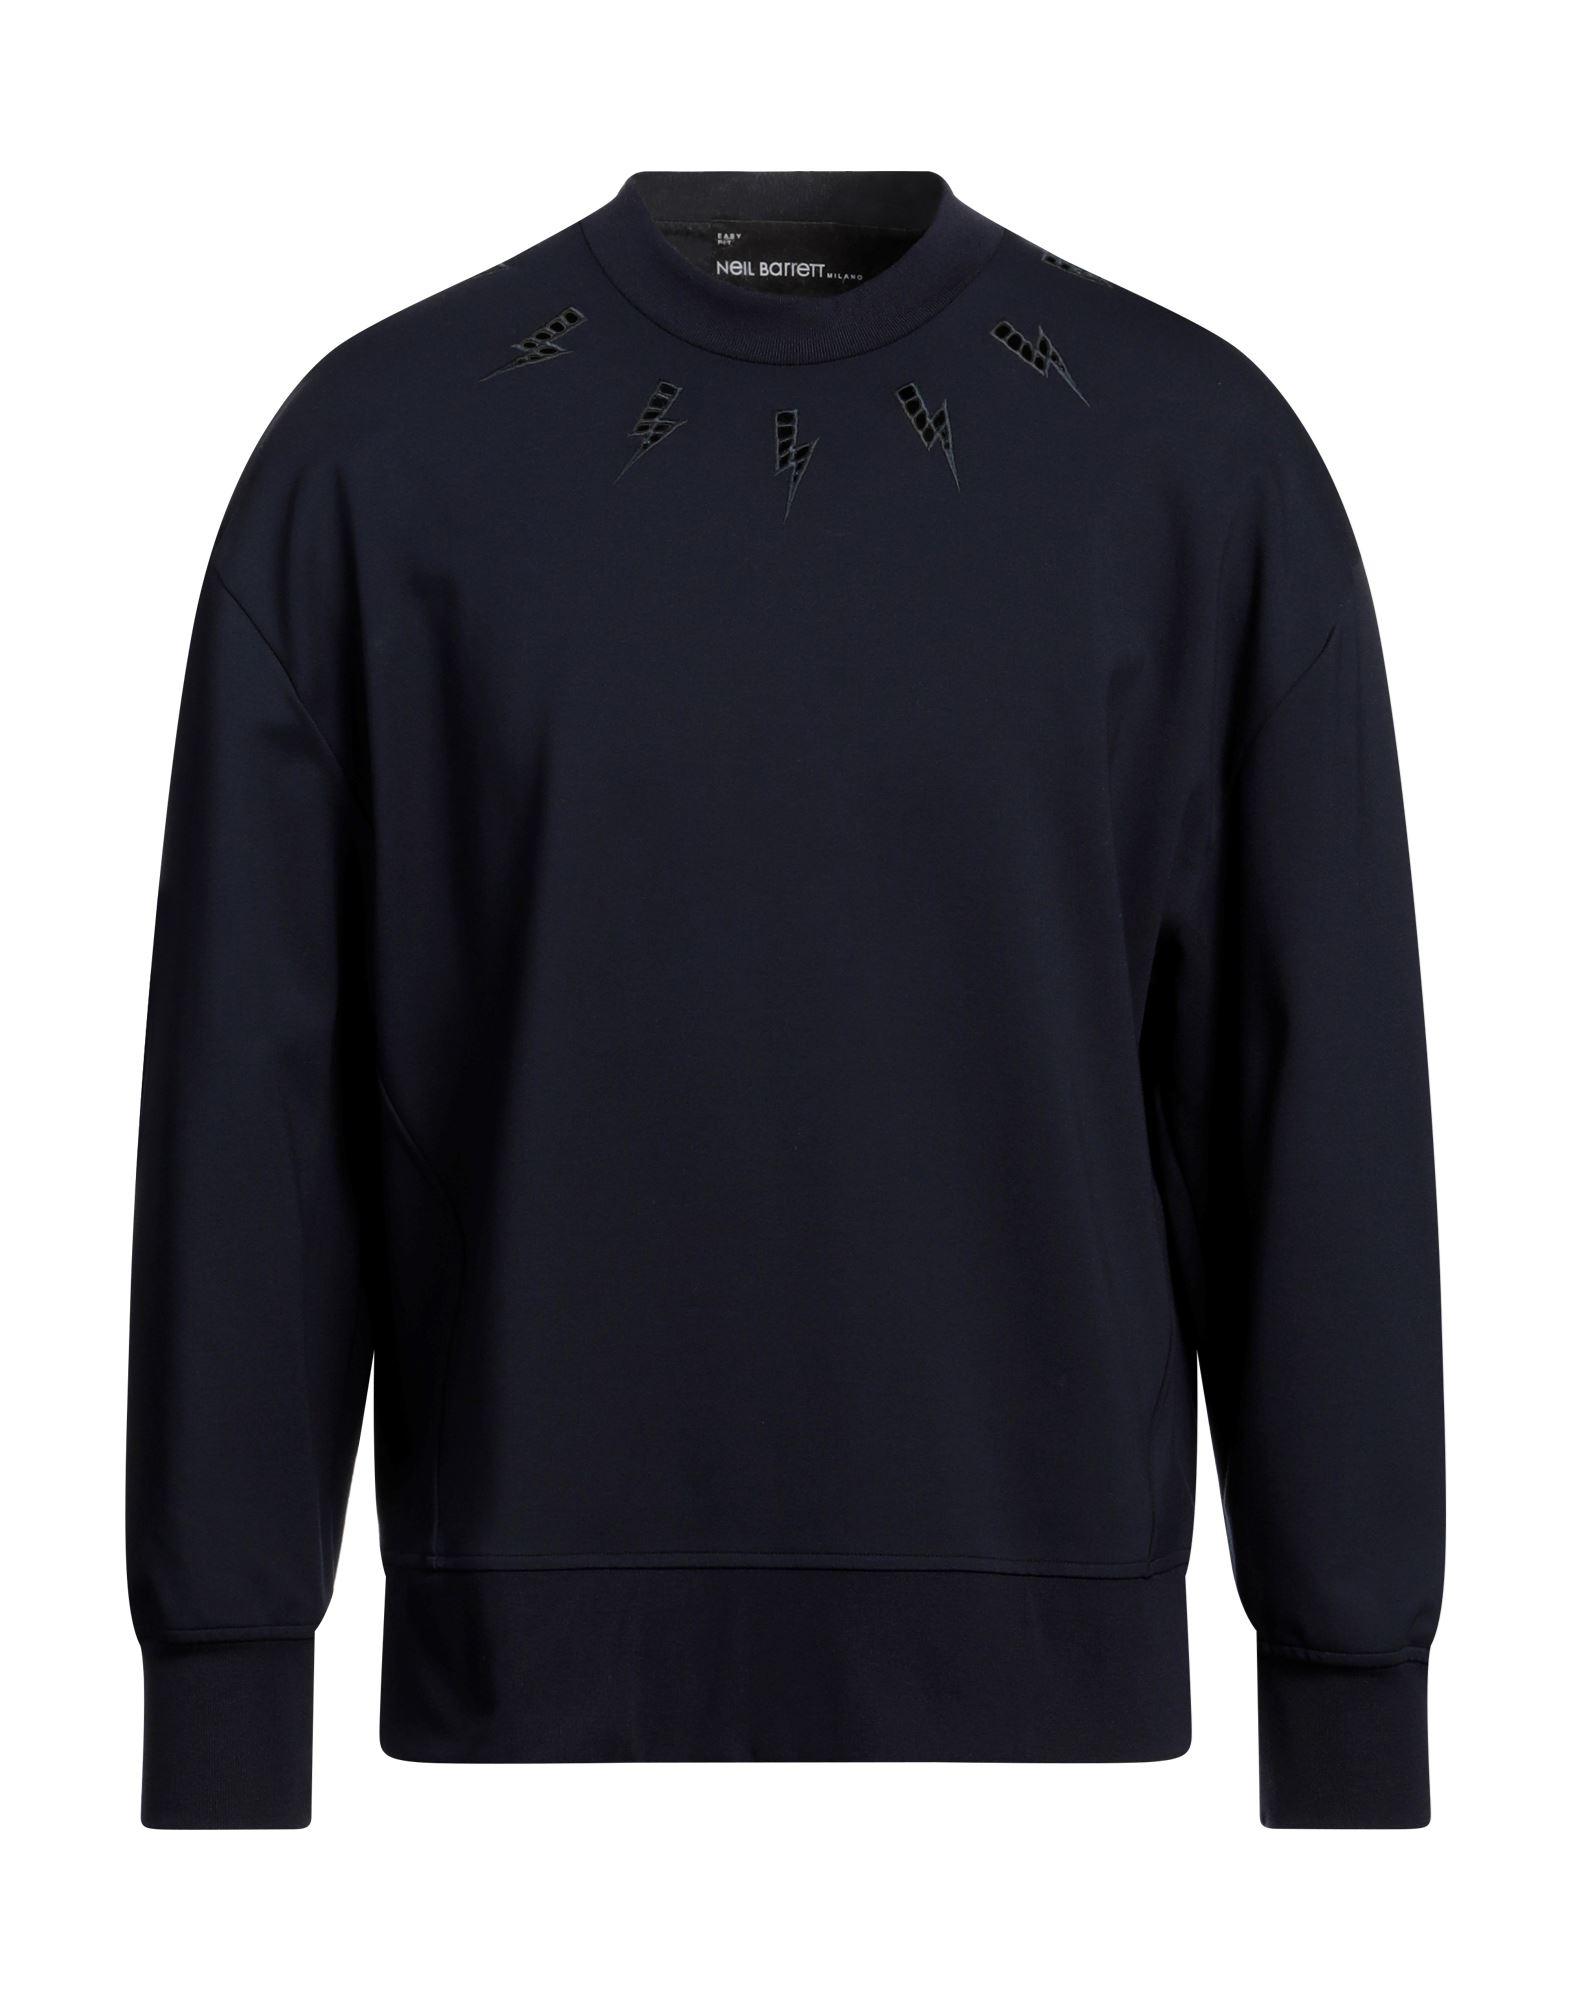 Neil Barrett Sweatshirts for Men | Online Sale up to 78% off | Lyst